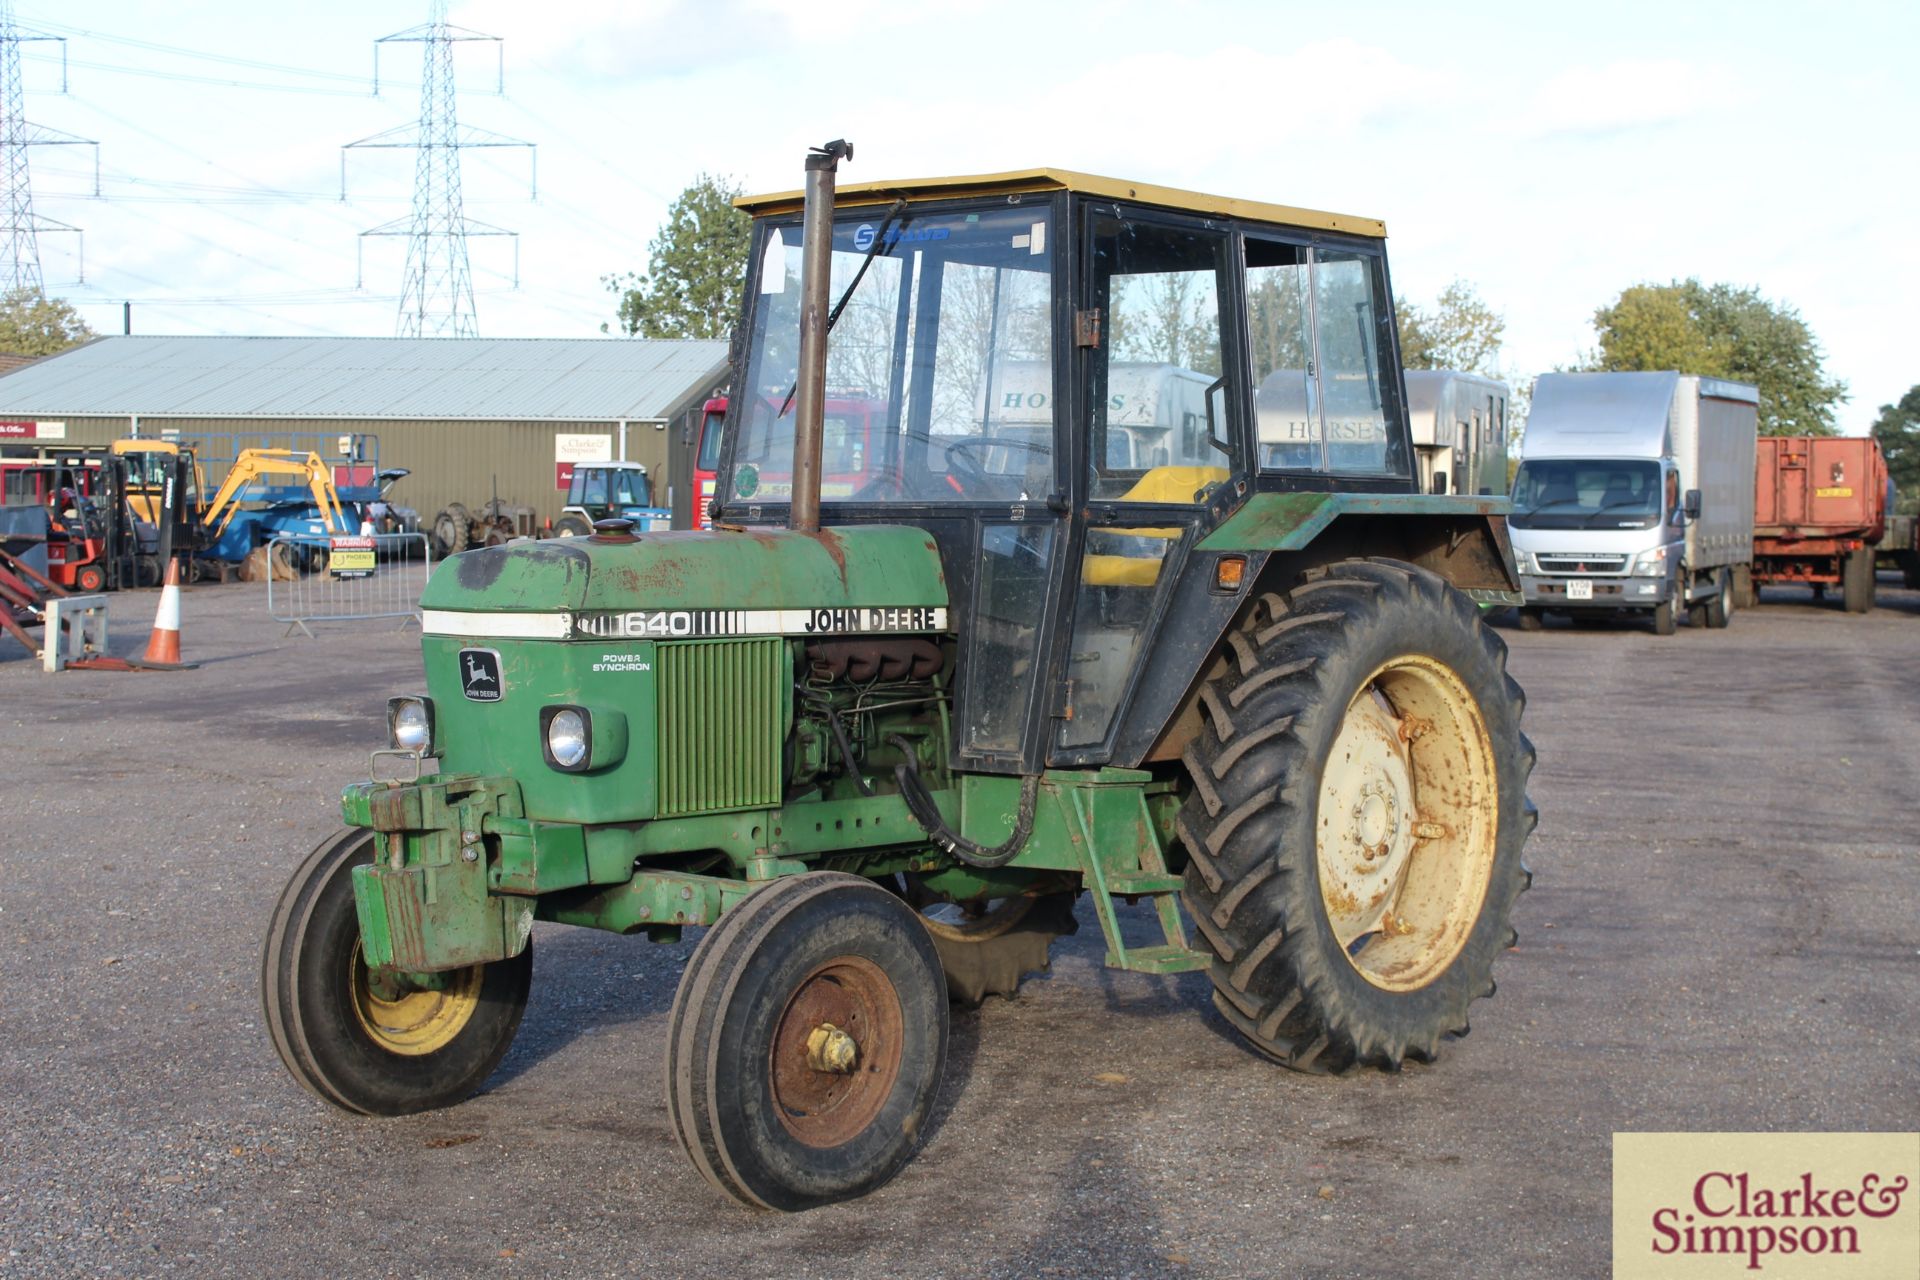 John Deere 1640 2WD tractor. Registration ETH 628V. 1980. 5,328 hours. 13.6R36 rear wheels and